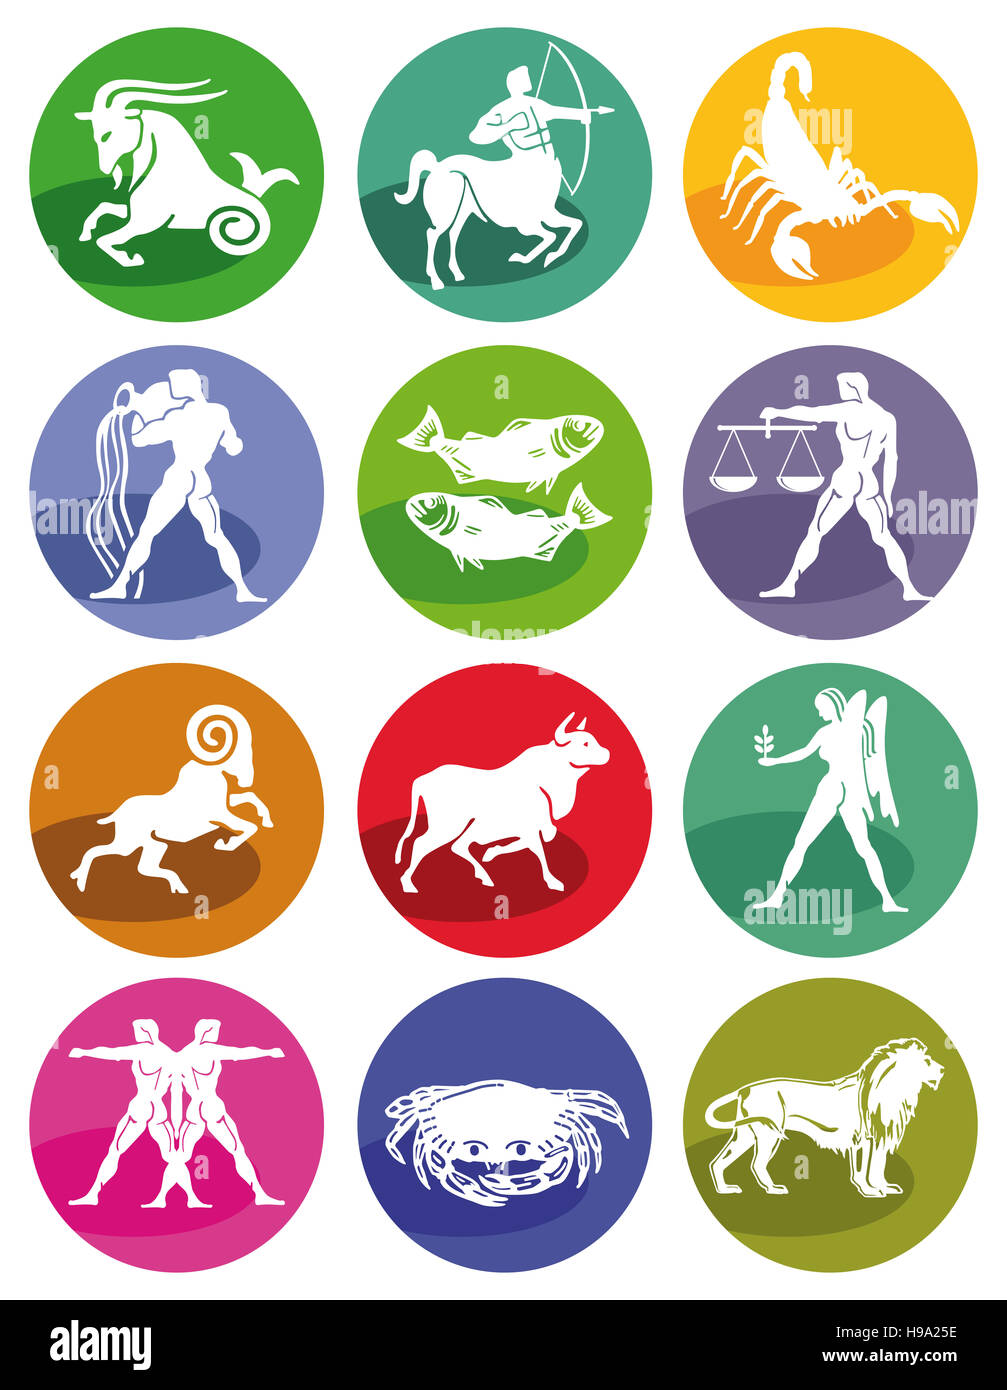 zodiac symbols meanings